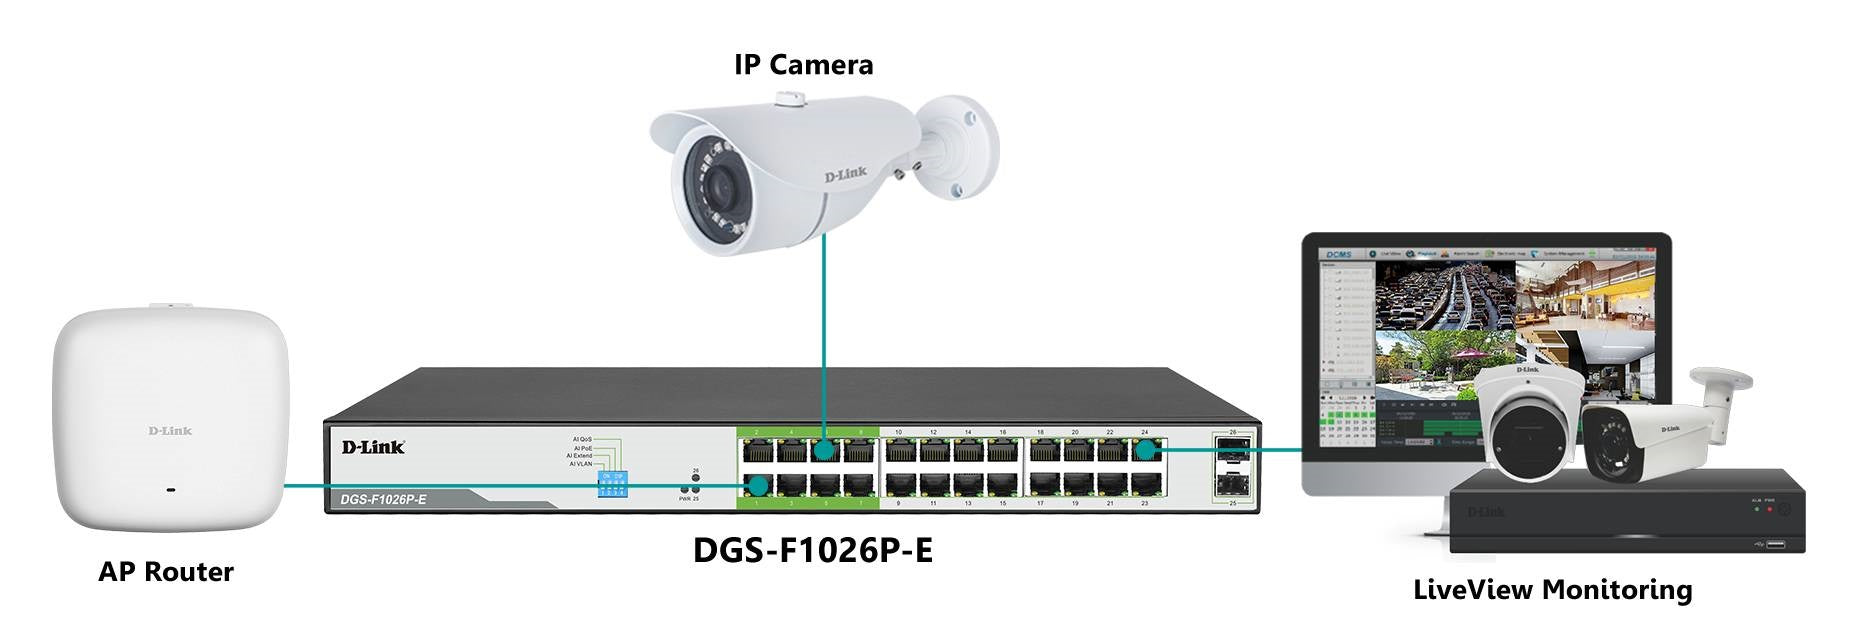 D-Link DGS-F1026P-E 250M 24-Port 1000Mbps PoE Switch with 2 SFP Ports